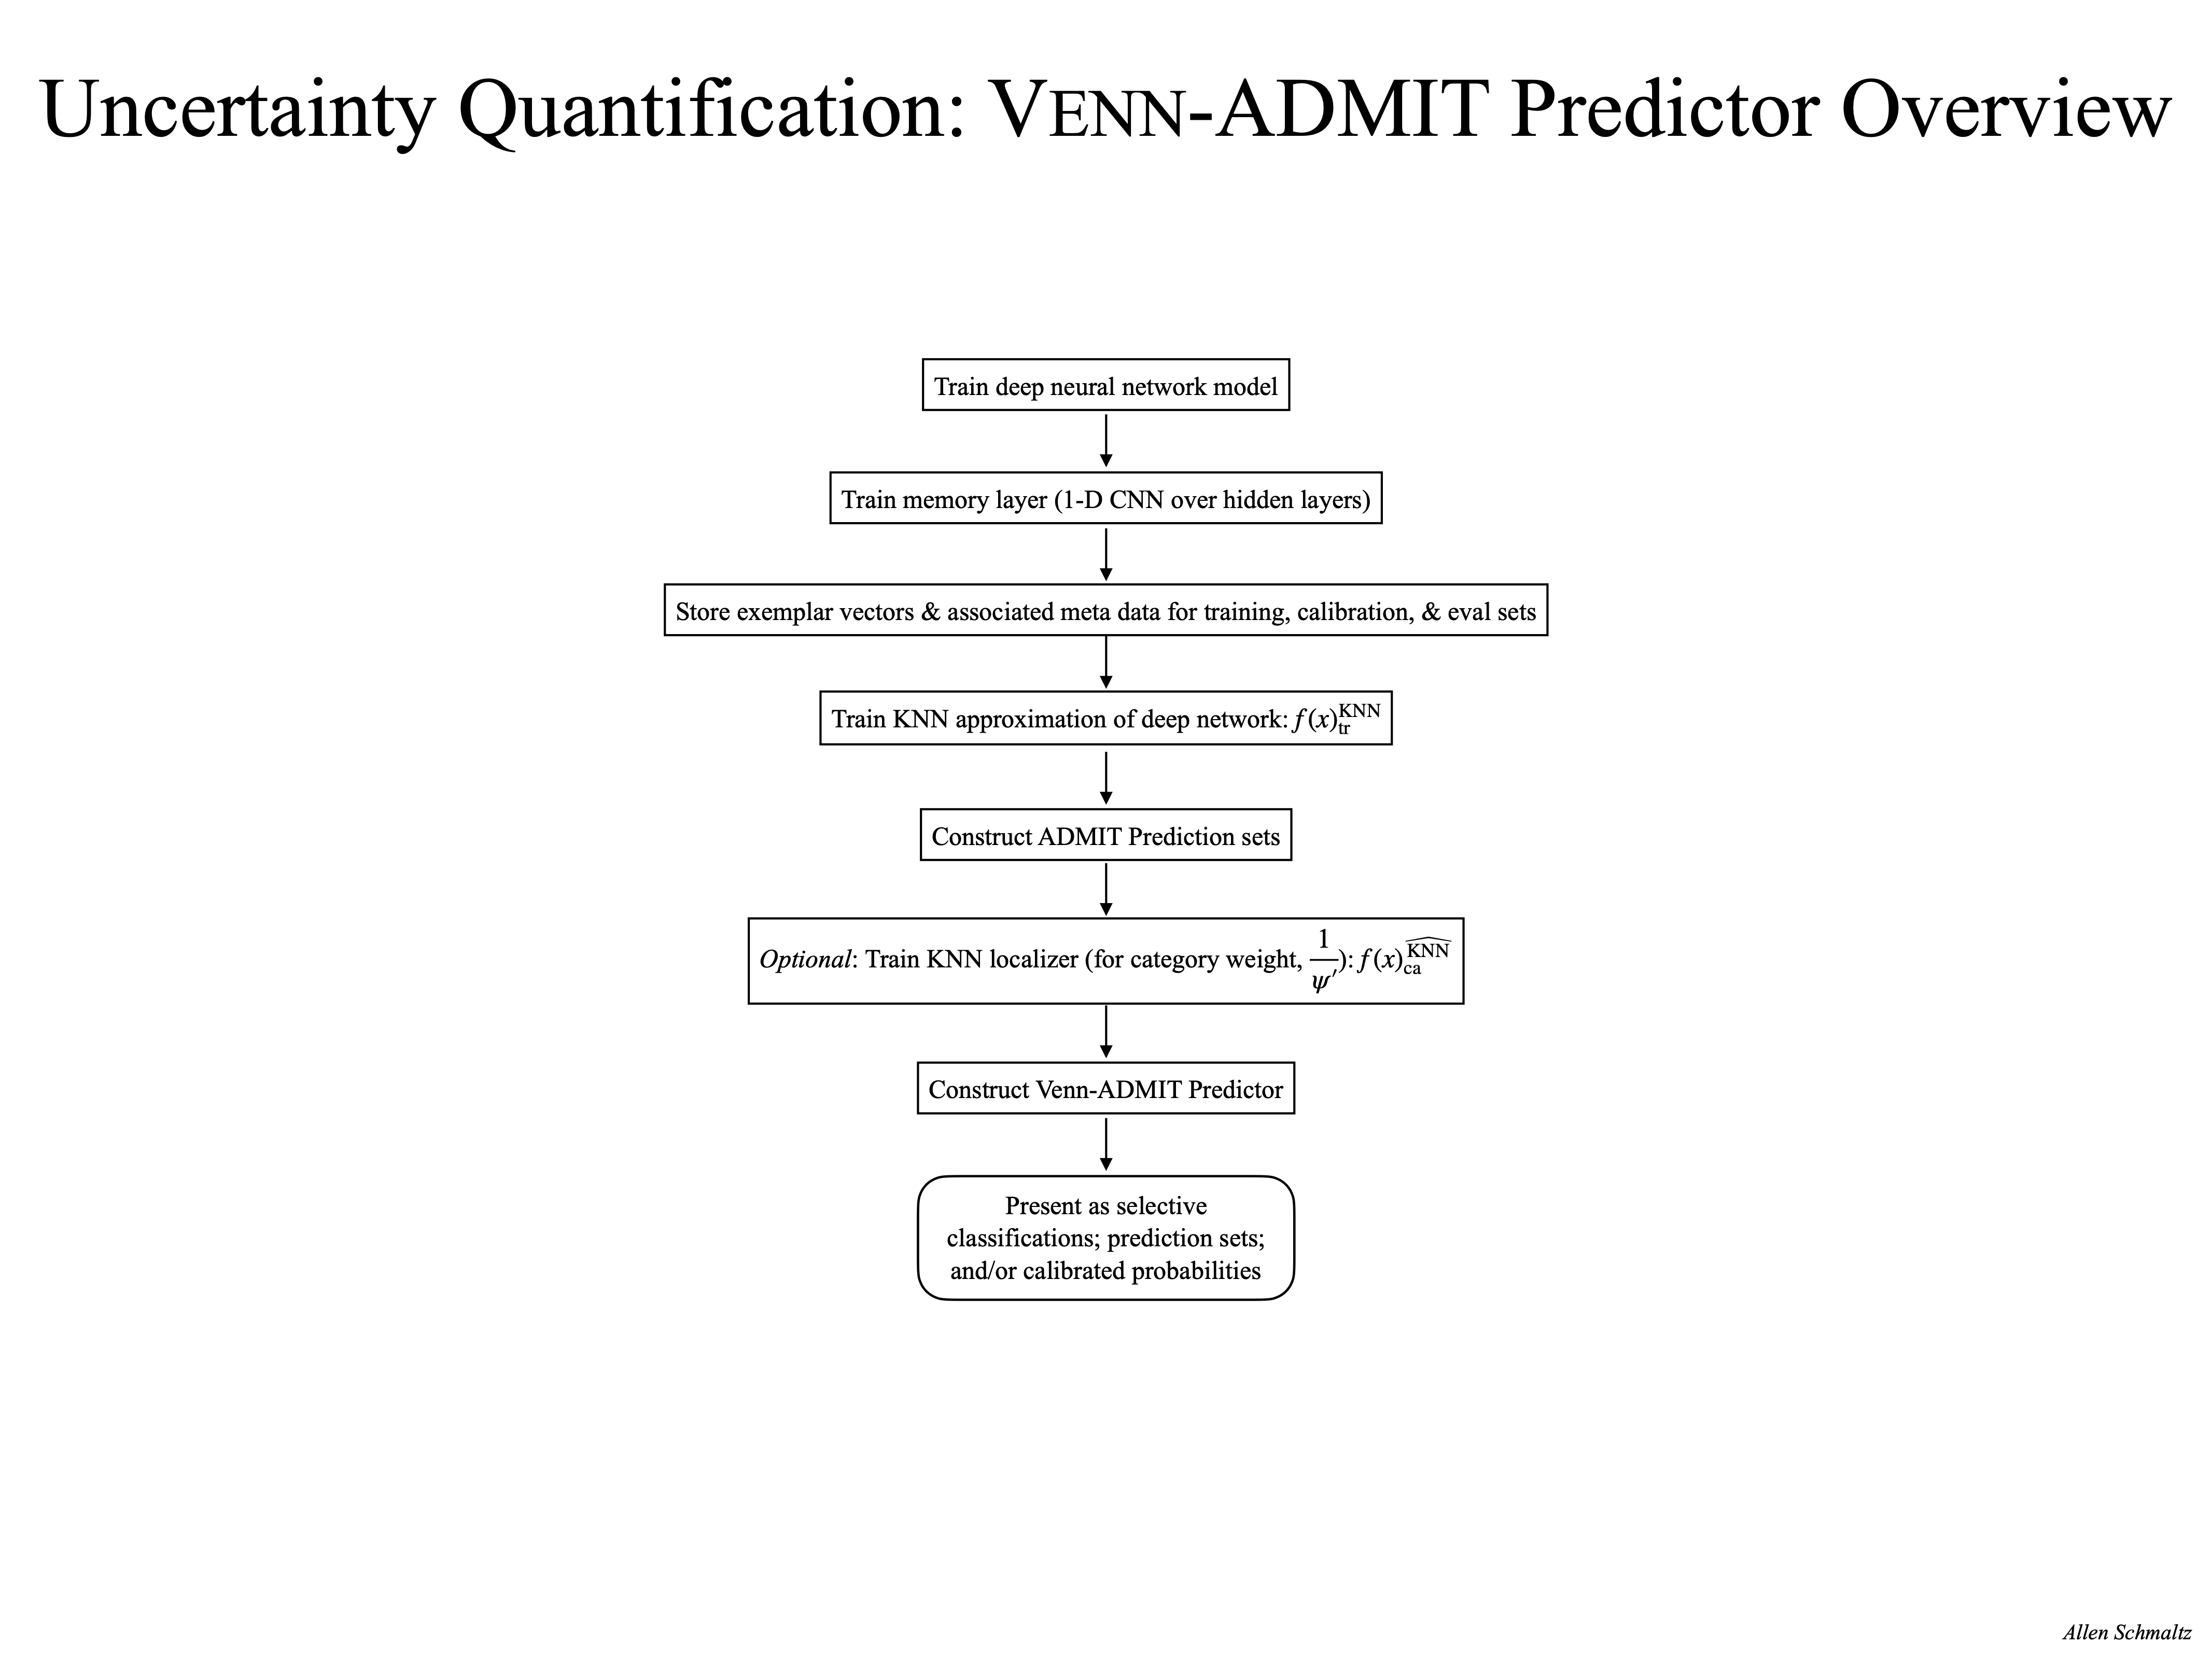 Uncertainty Quantification via the Venn-ADMIT Predictor